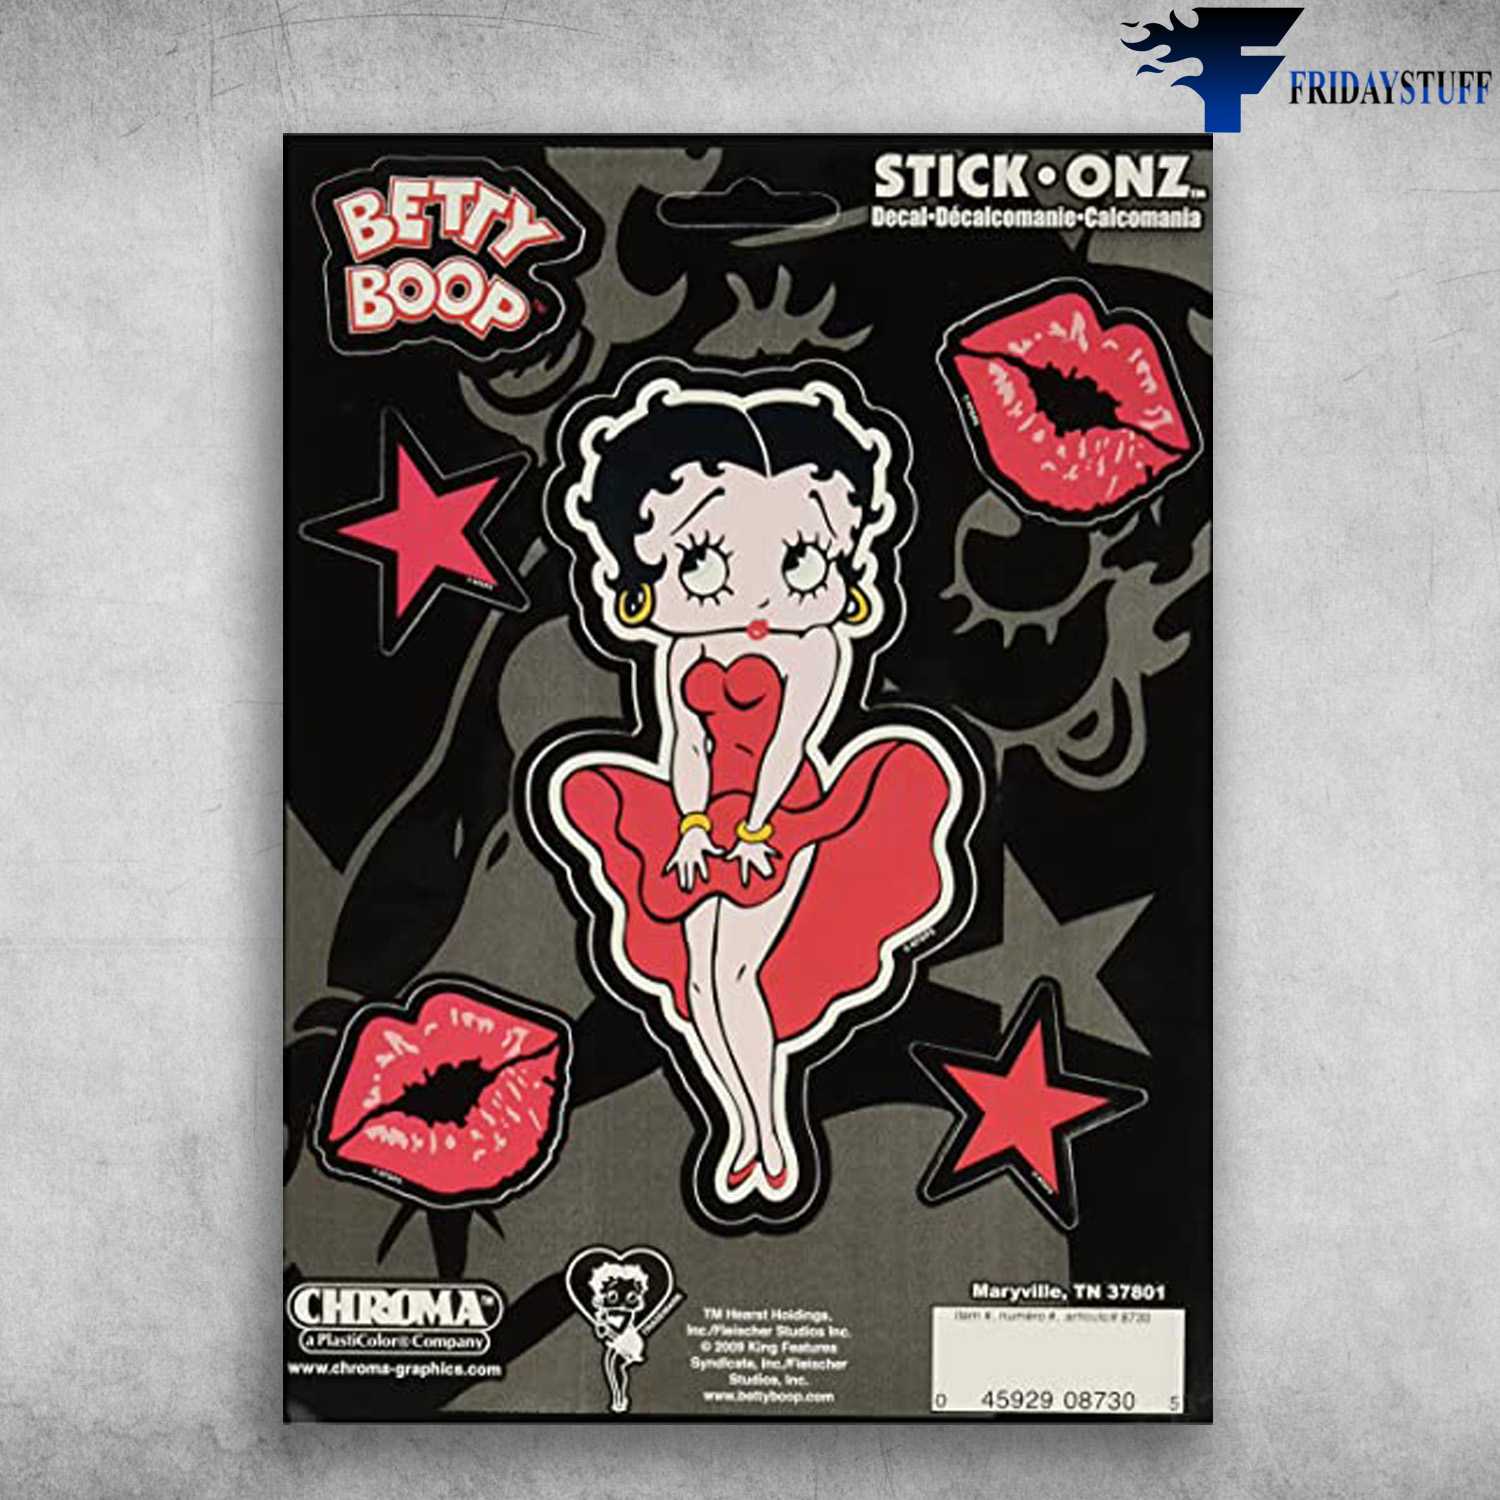 CHROMA 8730 - Betty Boop, Marilyn Stick-Onz calcomanía, Chiroma Poster